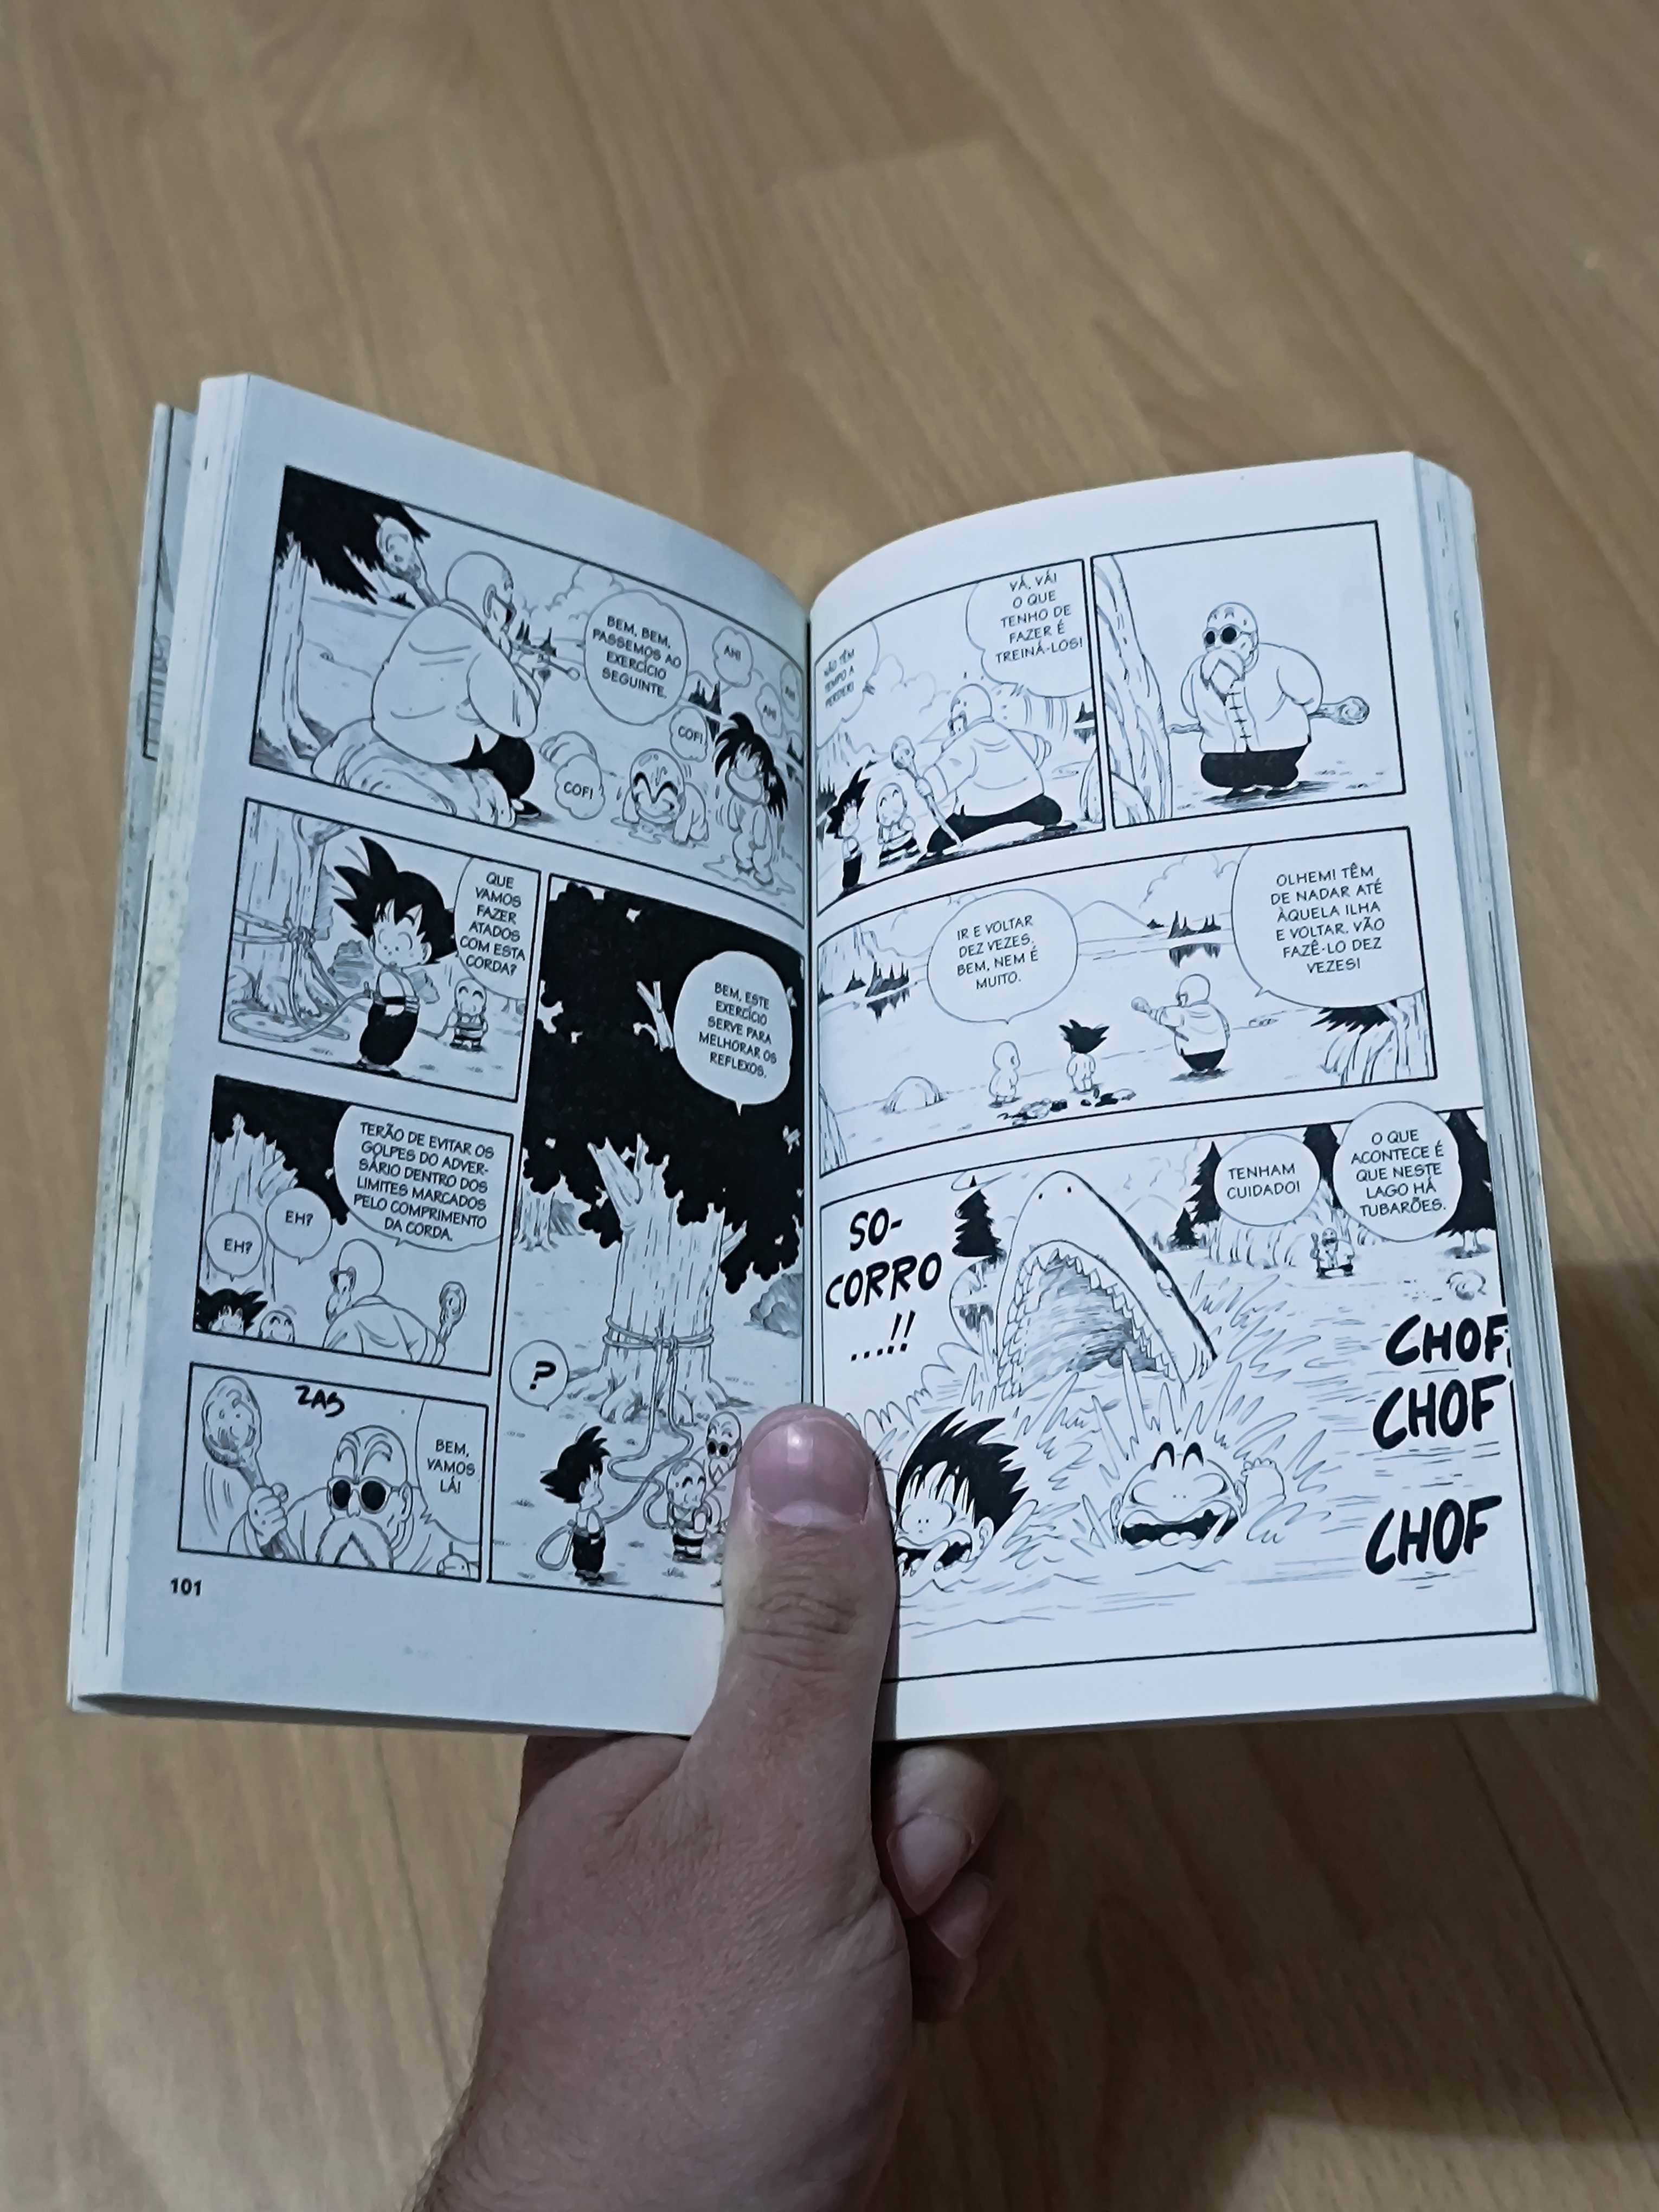 Manga Akira Toriyama Dragonball Vol 3